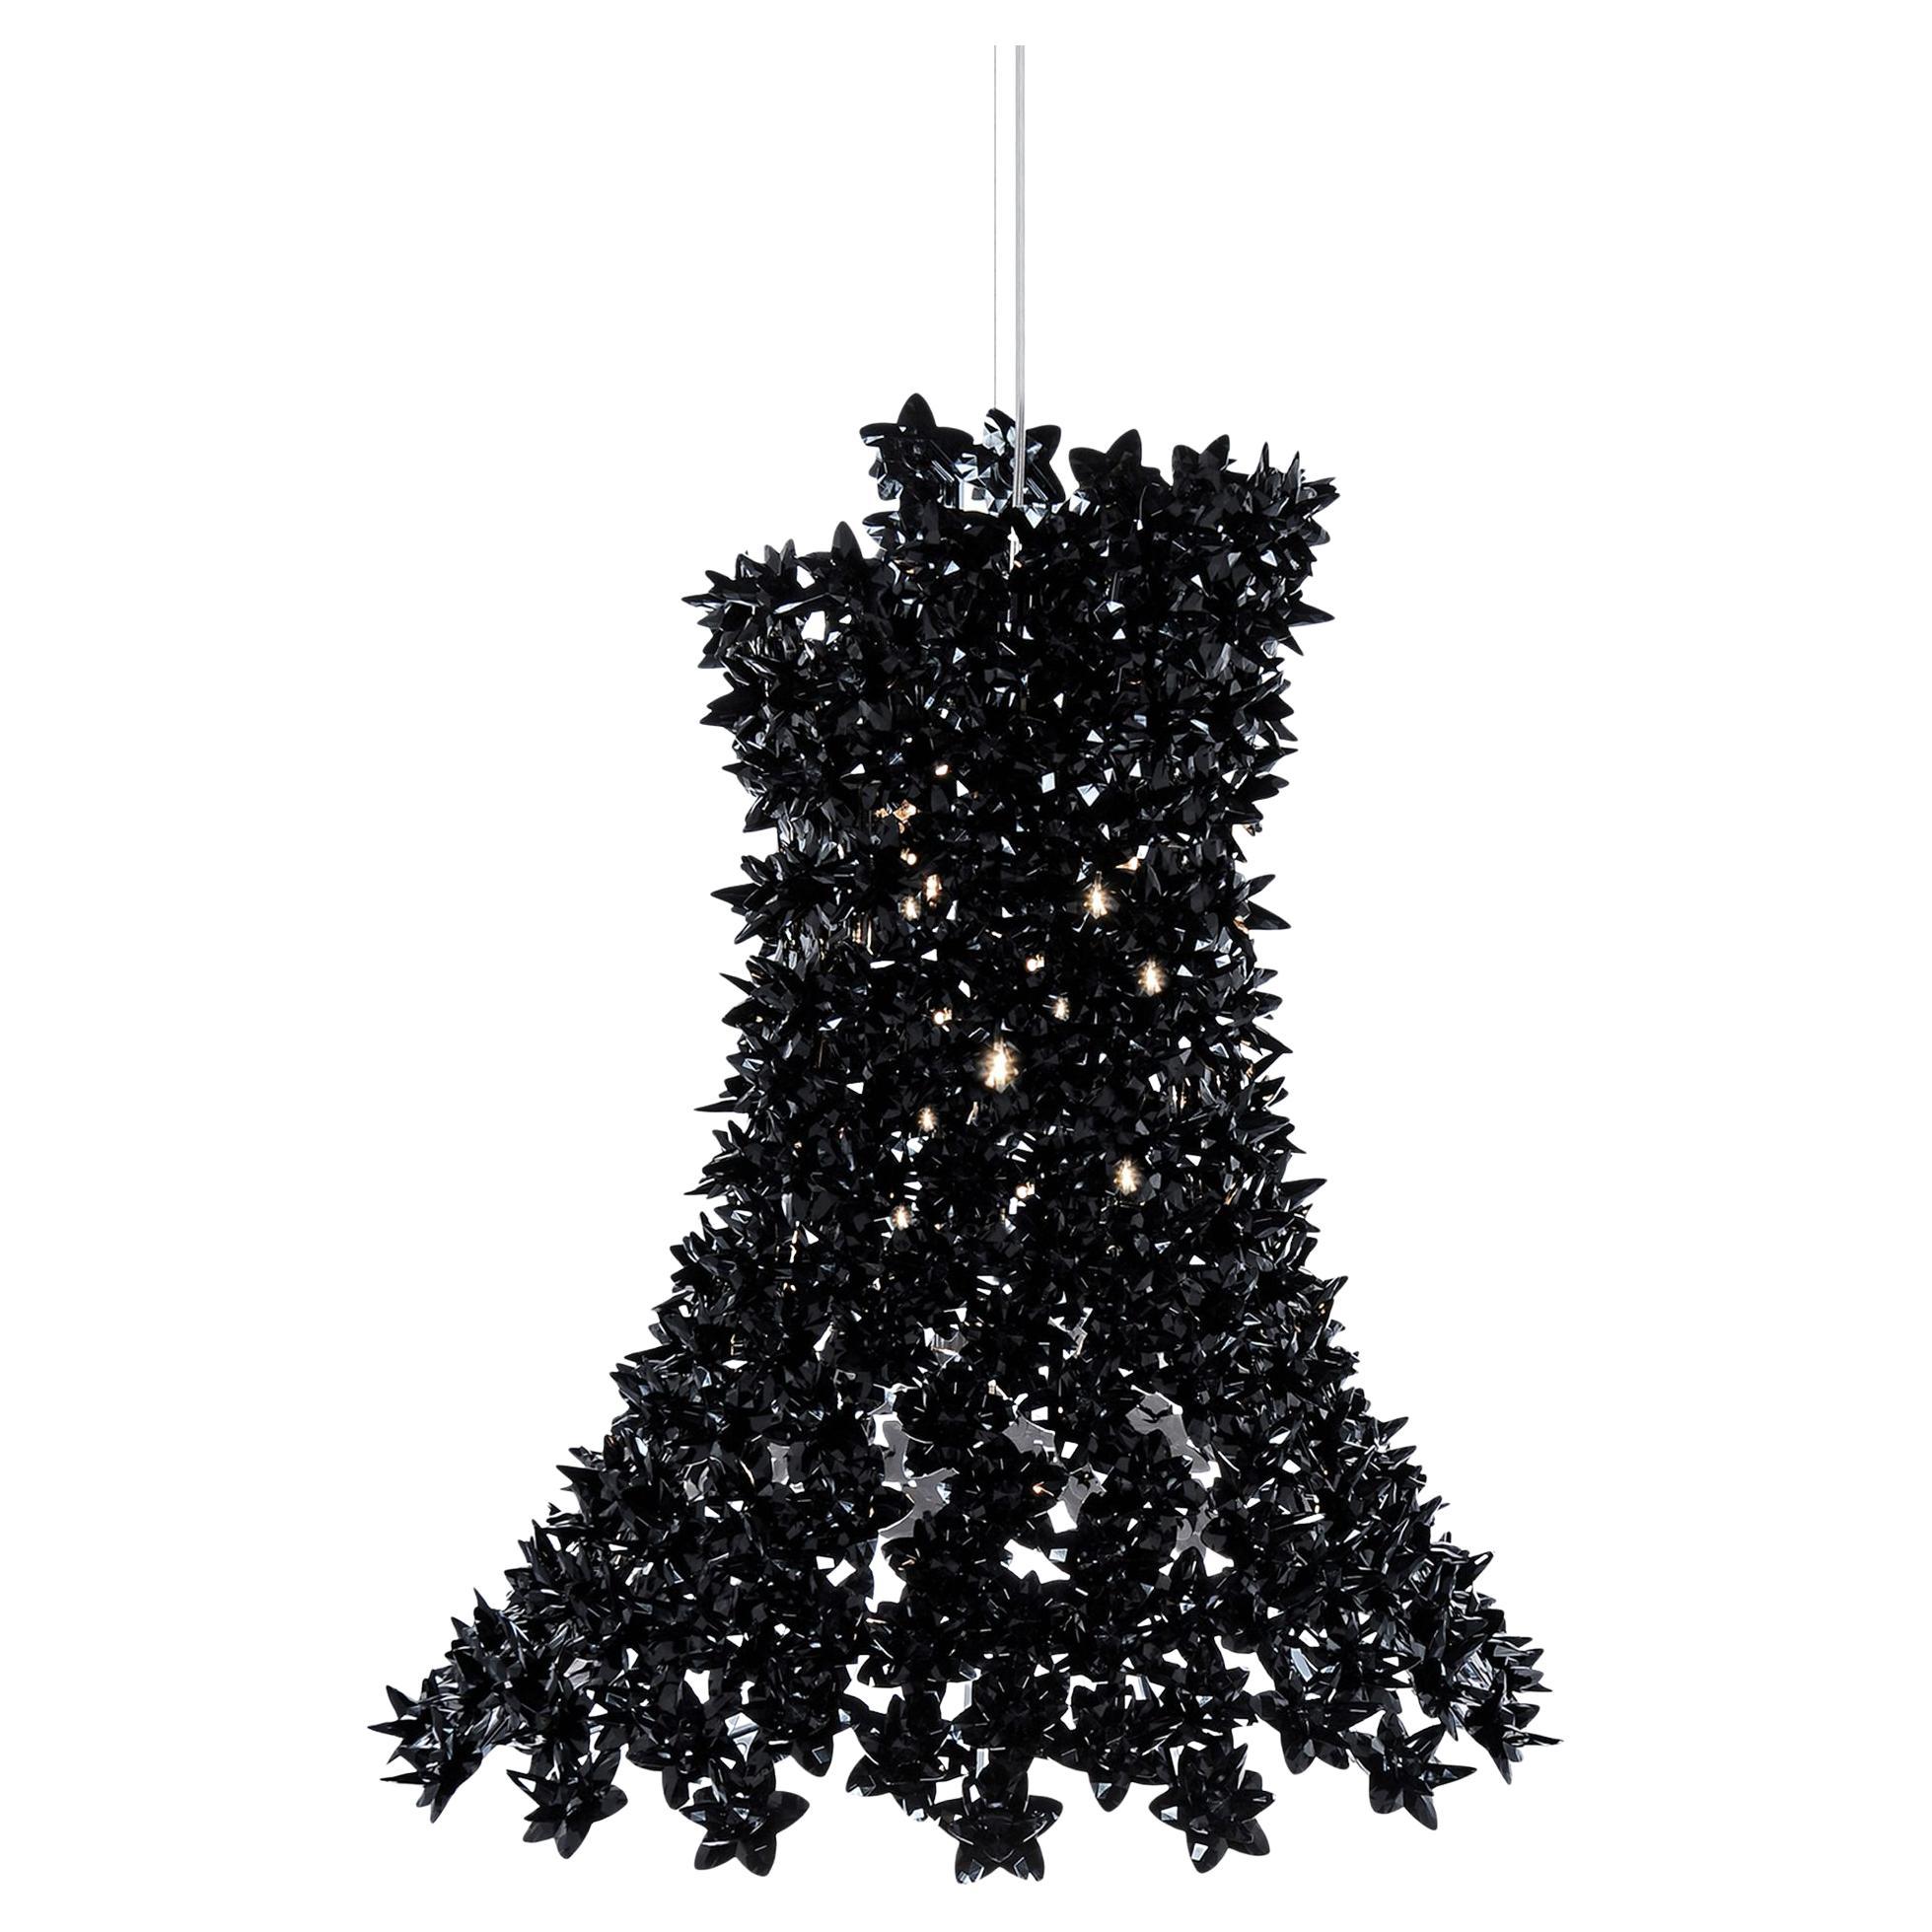 Kartell Bloom Suspension in Black by Ferruccio Laviani For Sale